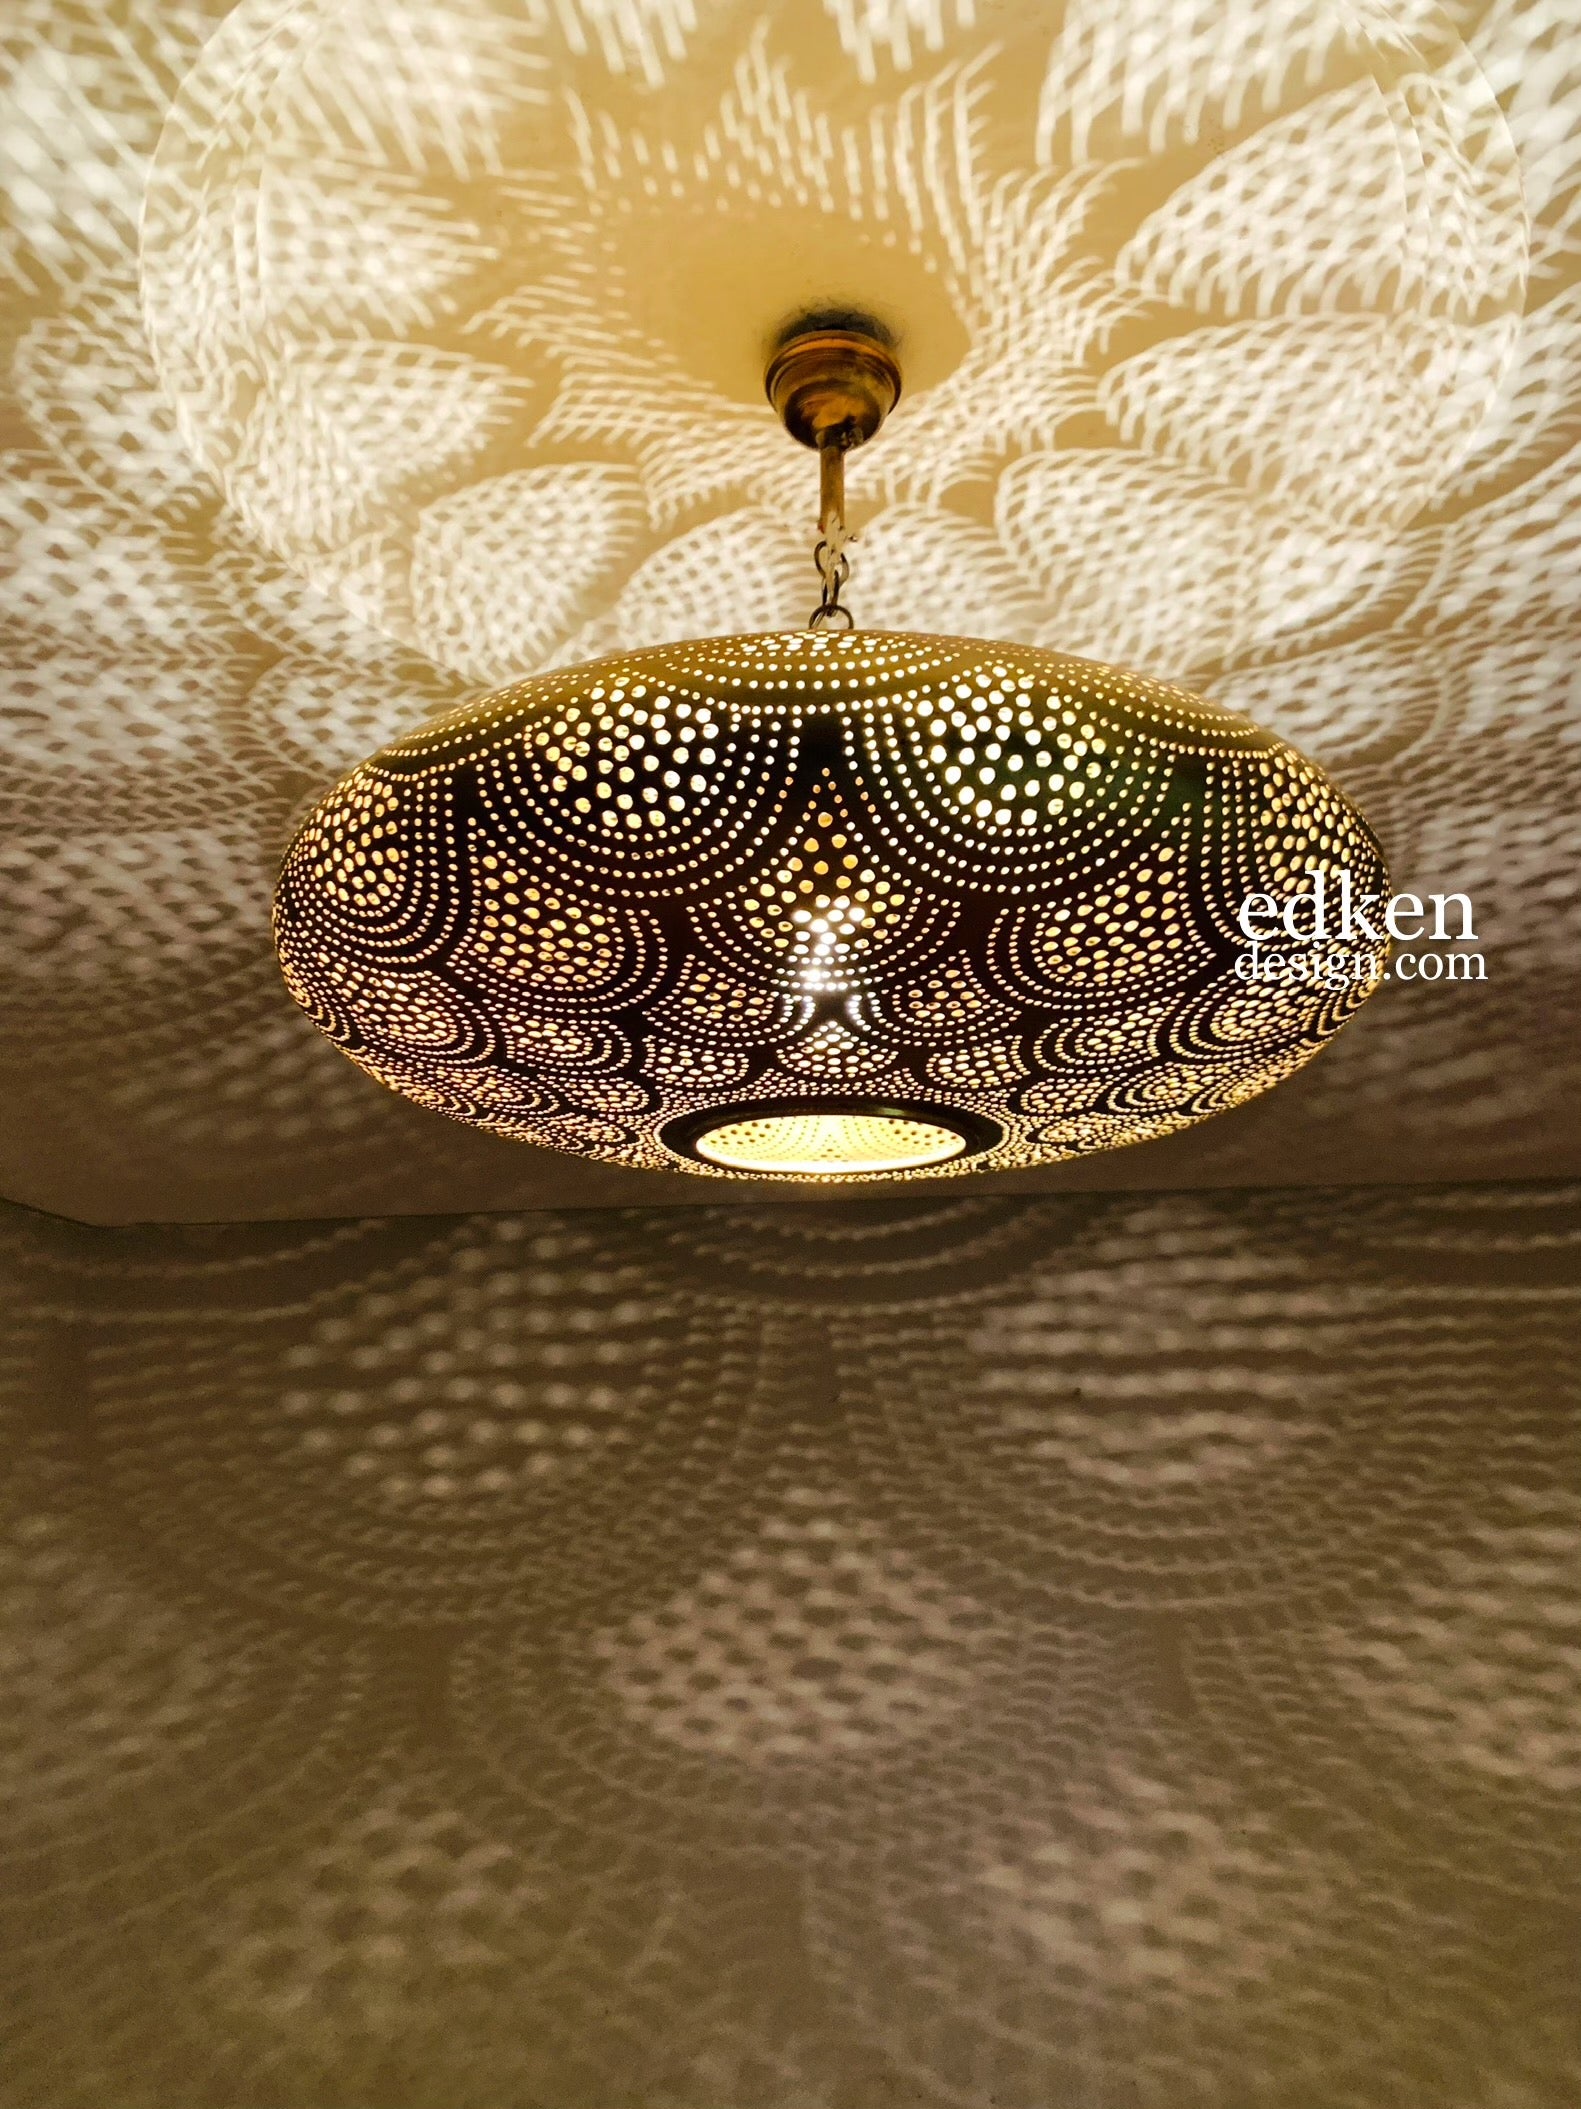 EDKEN LIGHTS - Closer View Morocco Ceiling Lamp Shades Fixture pierced Brass Hanging Lights Handmade Brass Morocco Home Decor Lighting